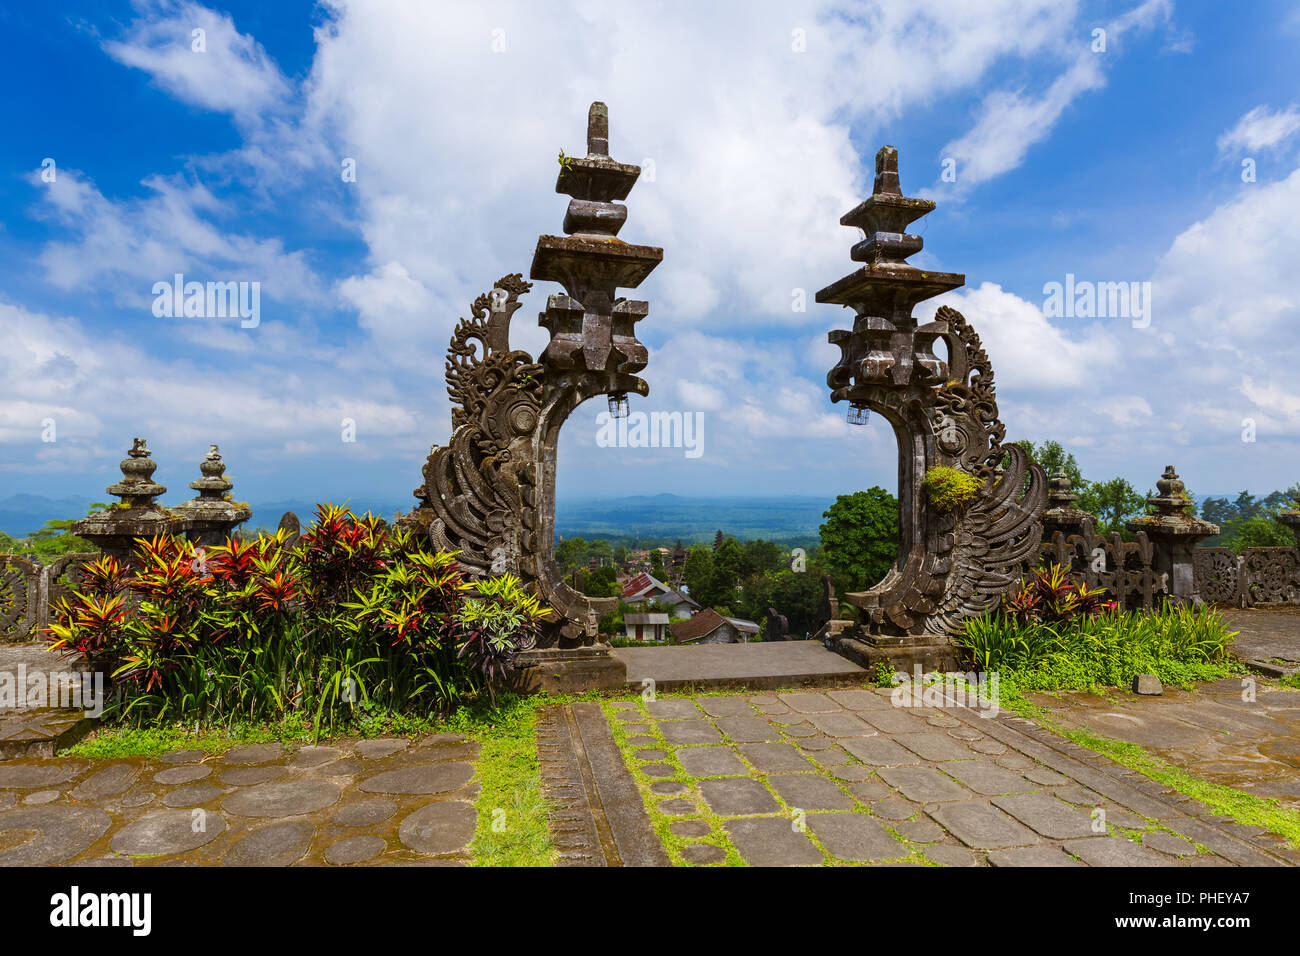 Pura Besakih temple - Bali Island Indonesia Stock Photo